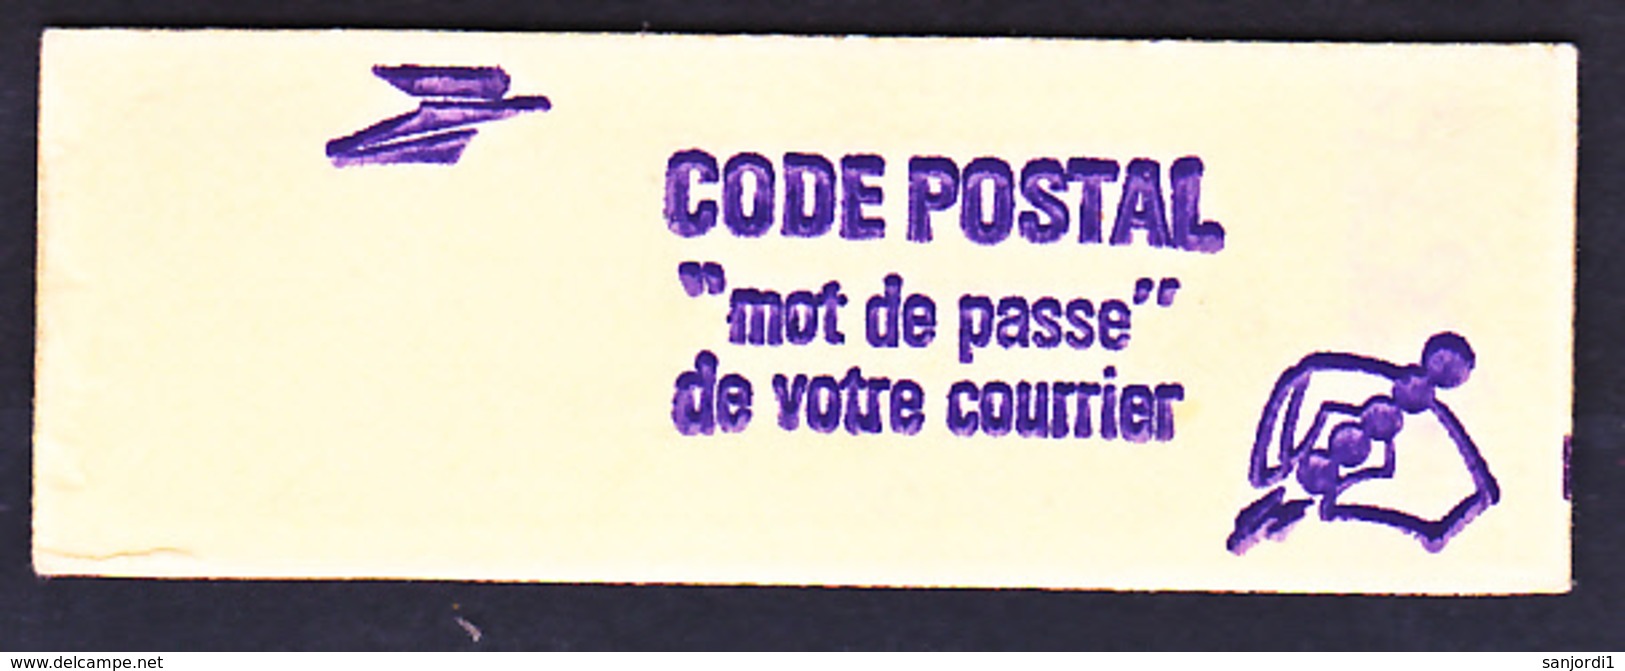 France 2059 C1 Carnet Sabine Ouvert  Neuf ** TB MNH  Sin Charnela Cote 8 - Modernes : 1959-...